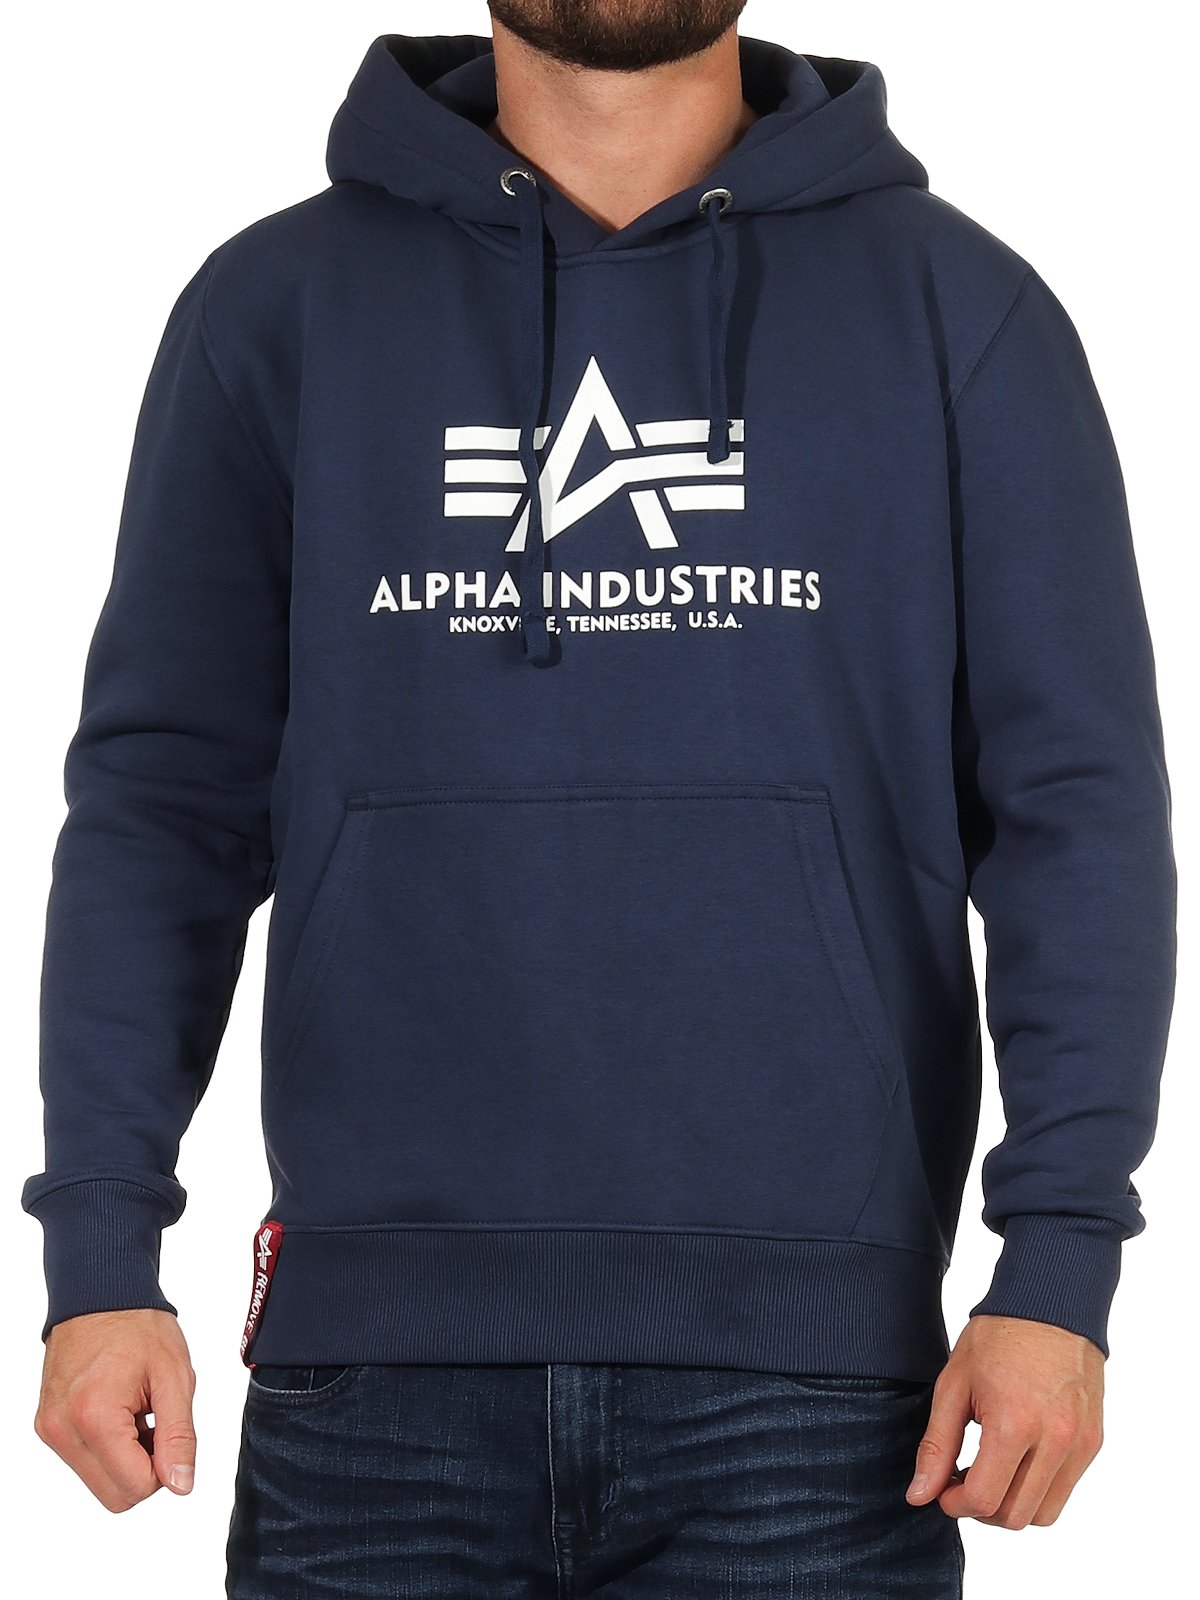 Alpha Industries Hoody Sweatshirt Basic 178312 Pullover Hoodie Herren eBay Sport 